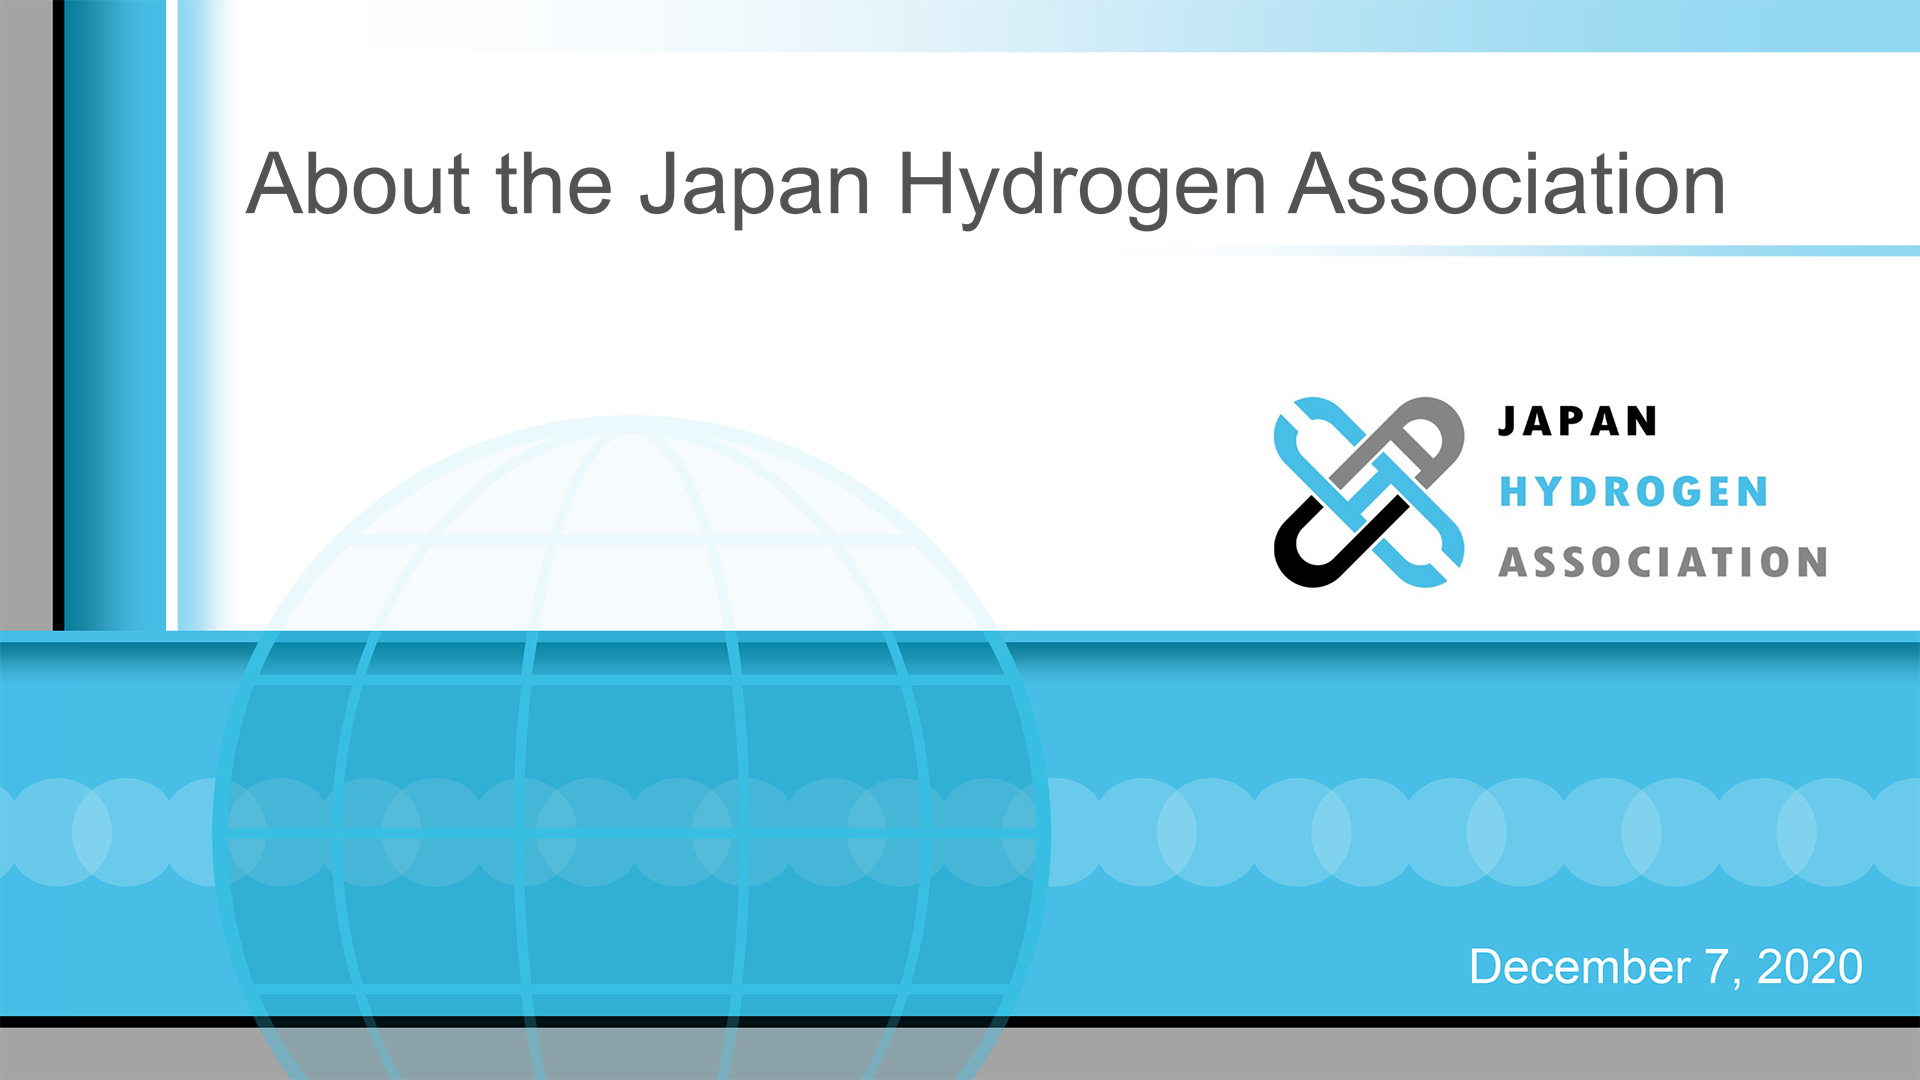 About the Japan Hydrogen Association